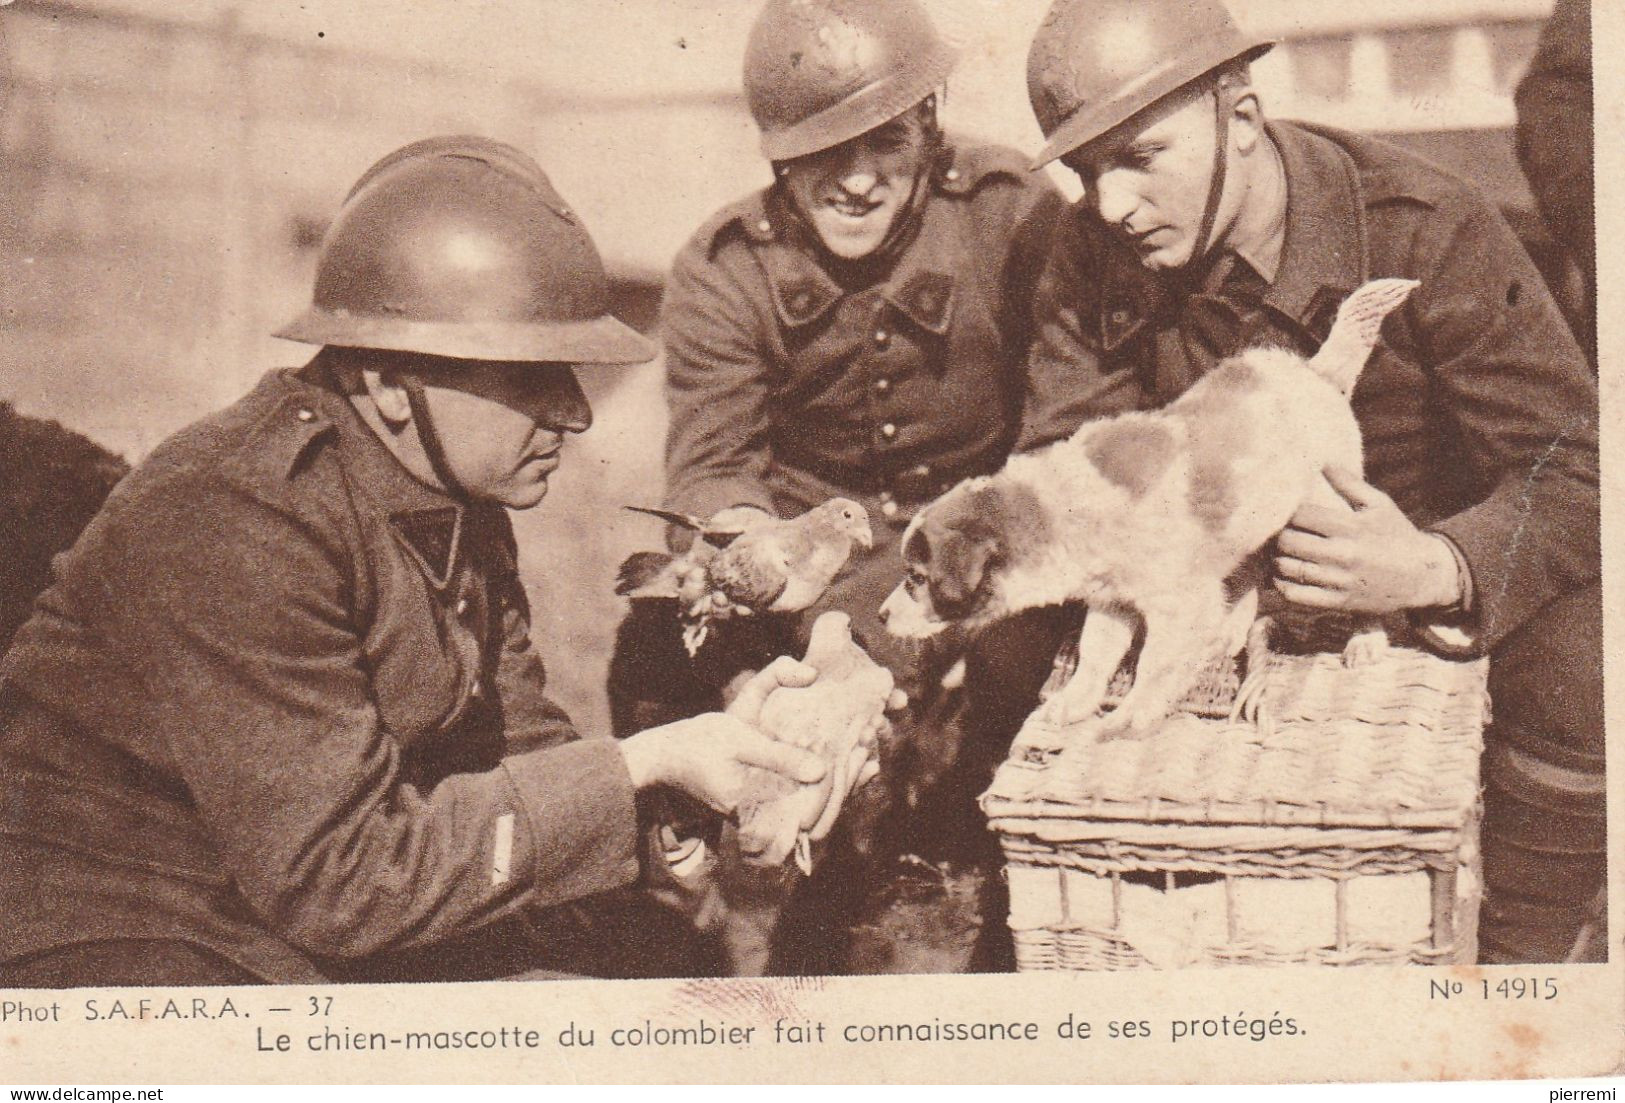 Photo France Press No.14915 - Weltkrieg 1939-45